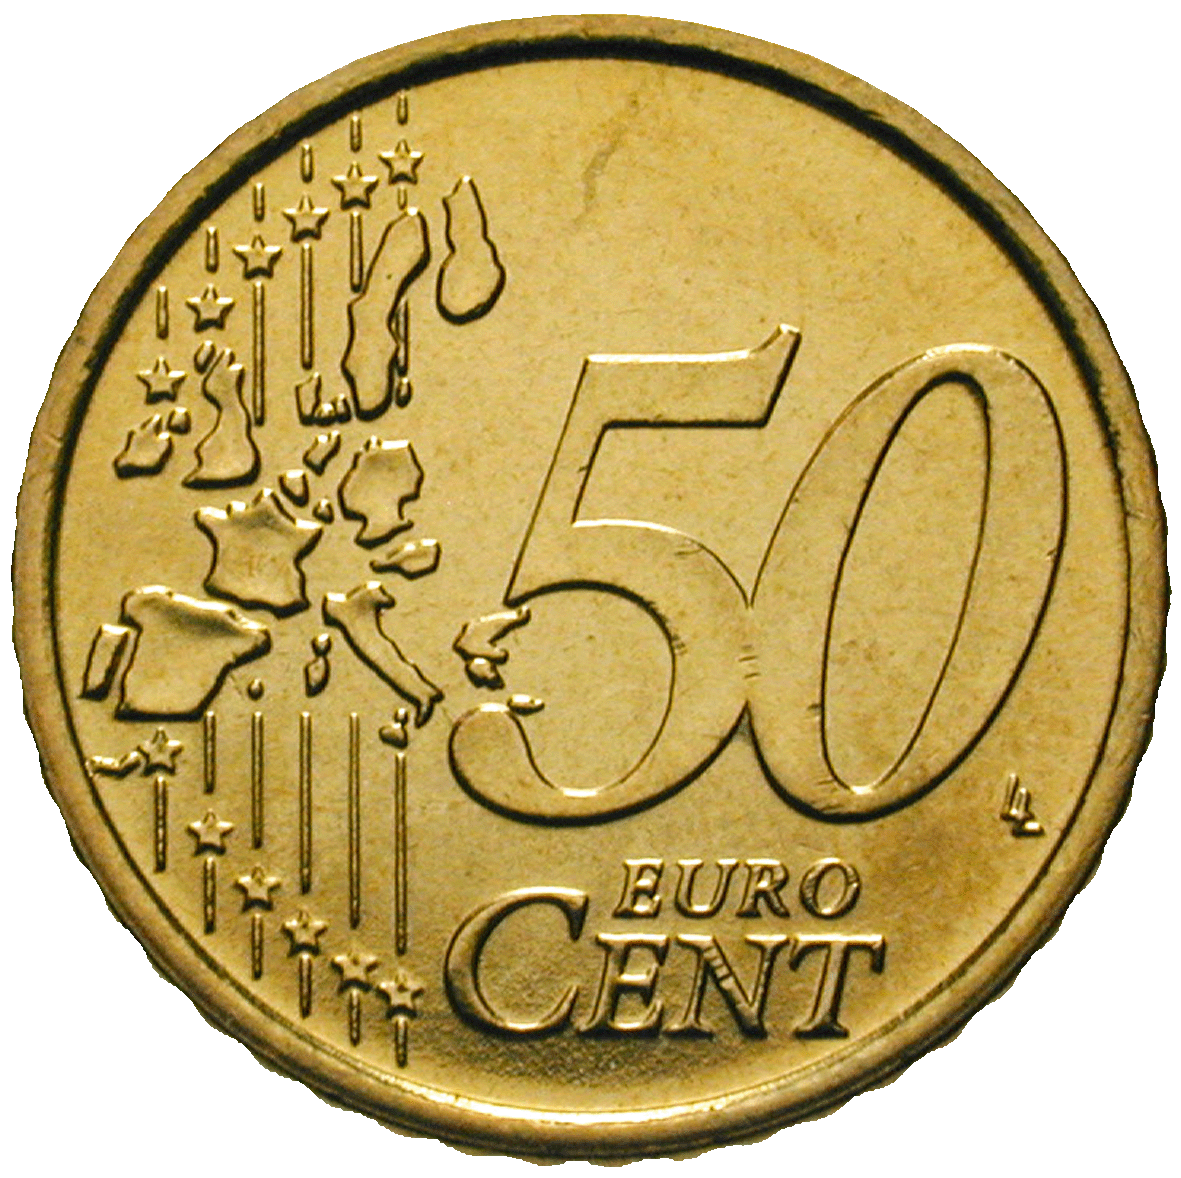 Republic of Italy, 50 Euro Cent 2002 (reverse)